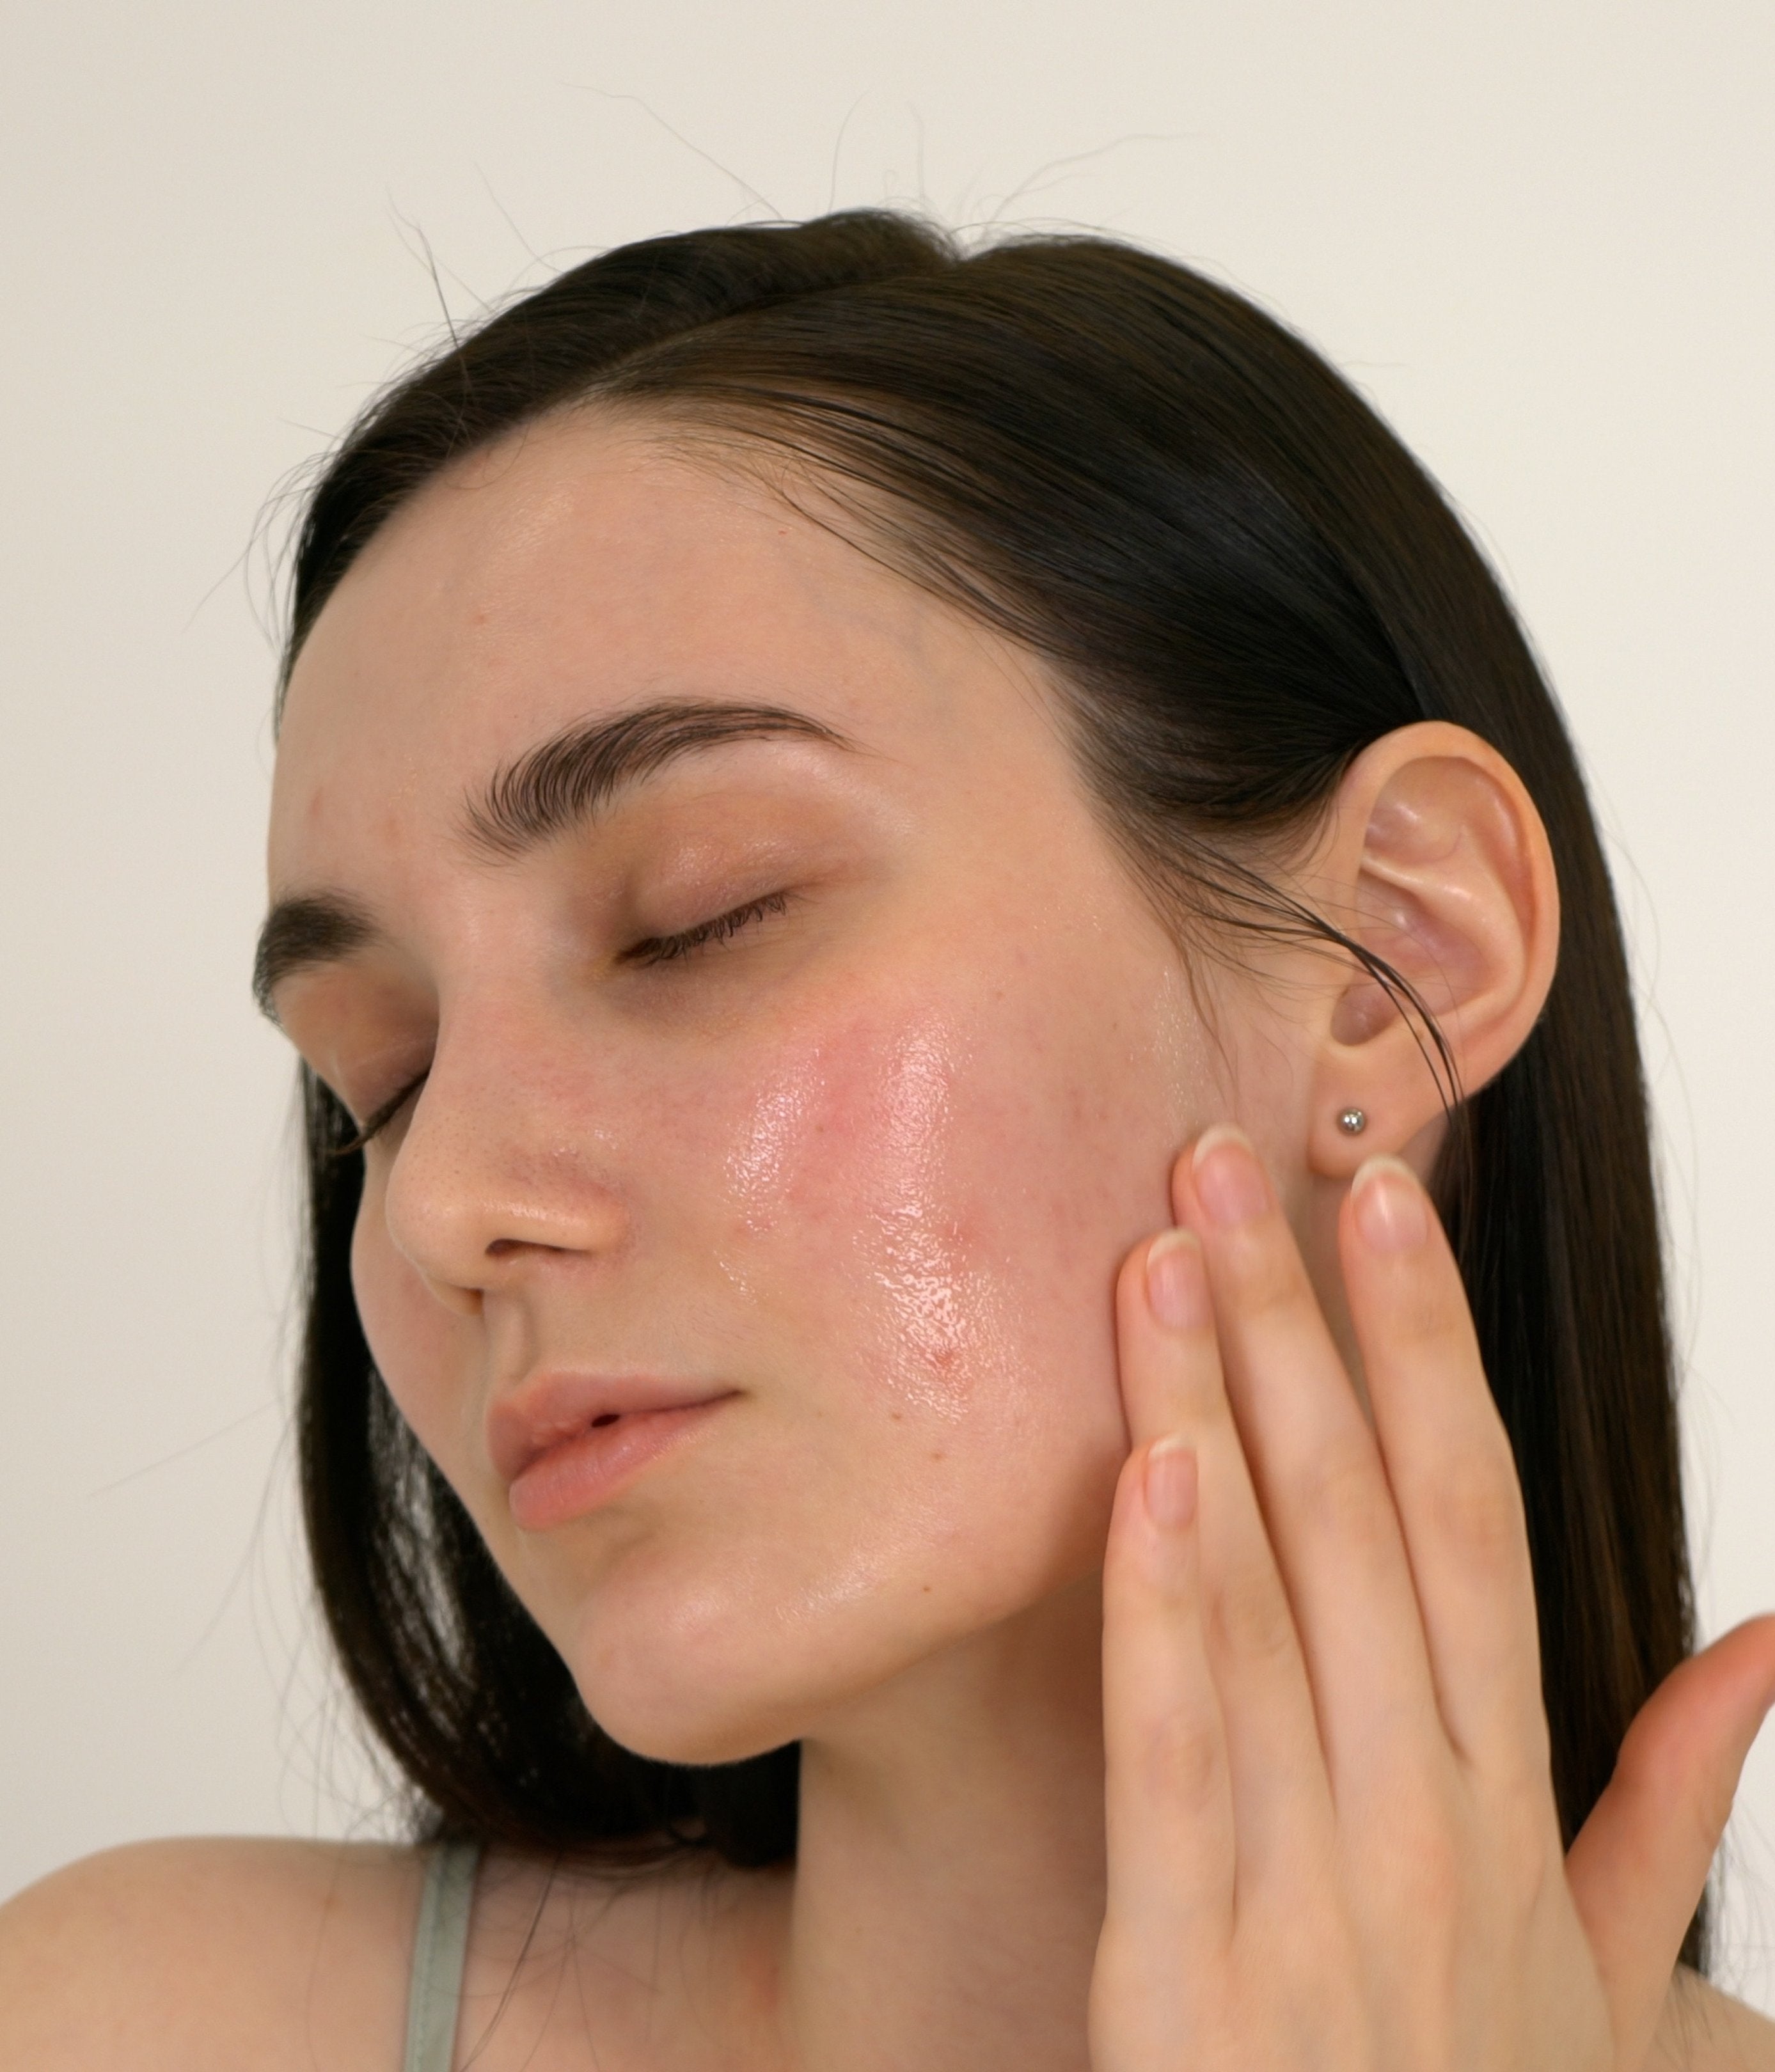 Acne prone skin